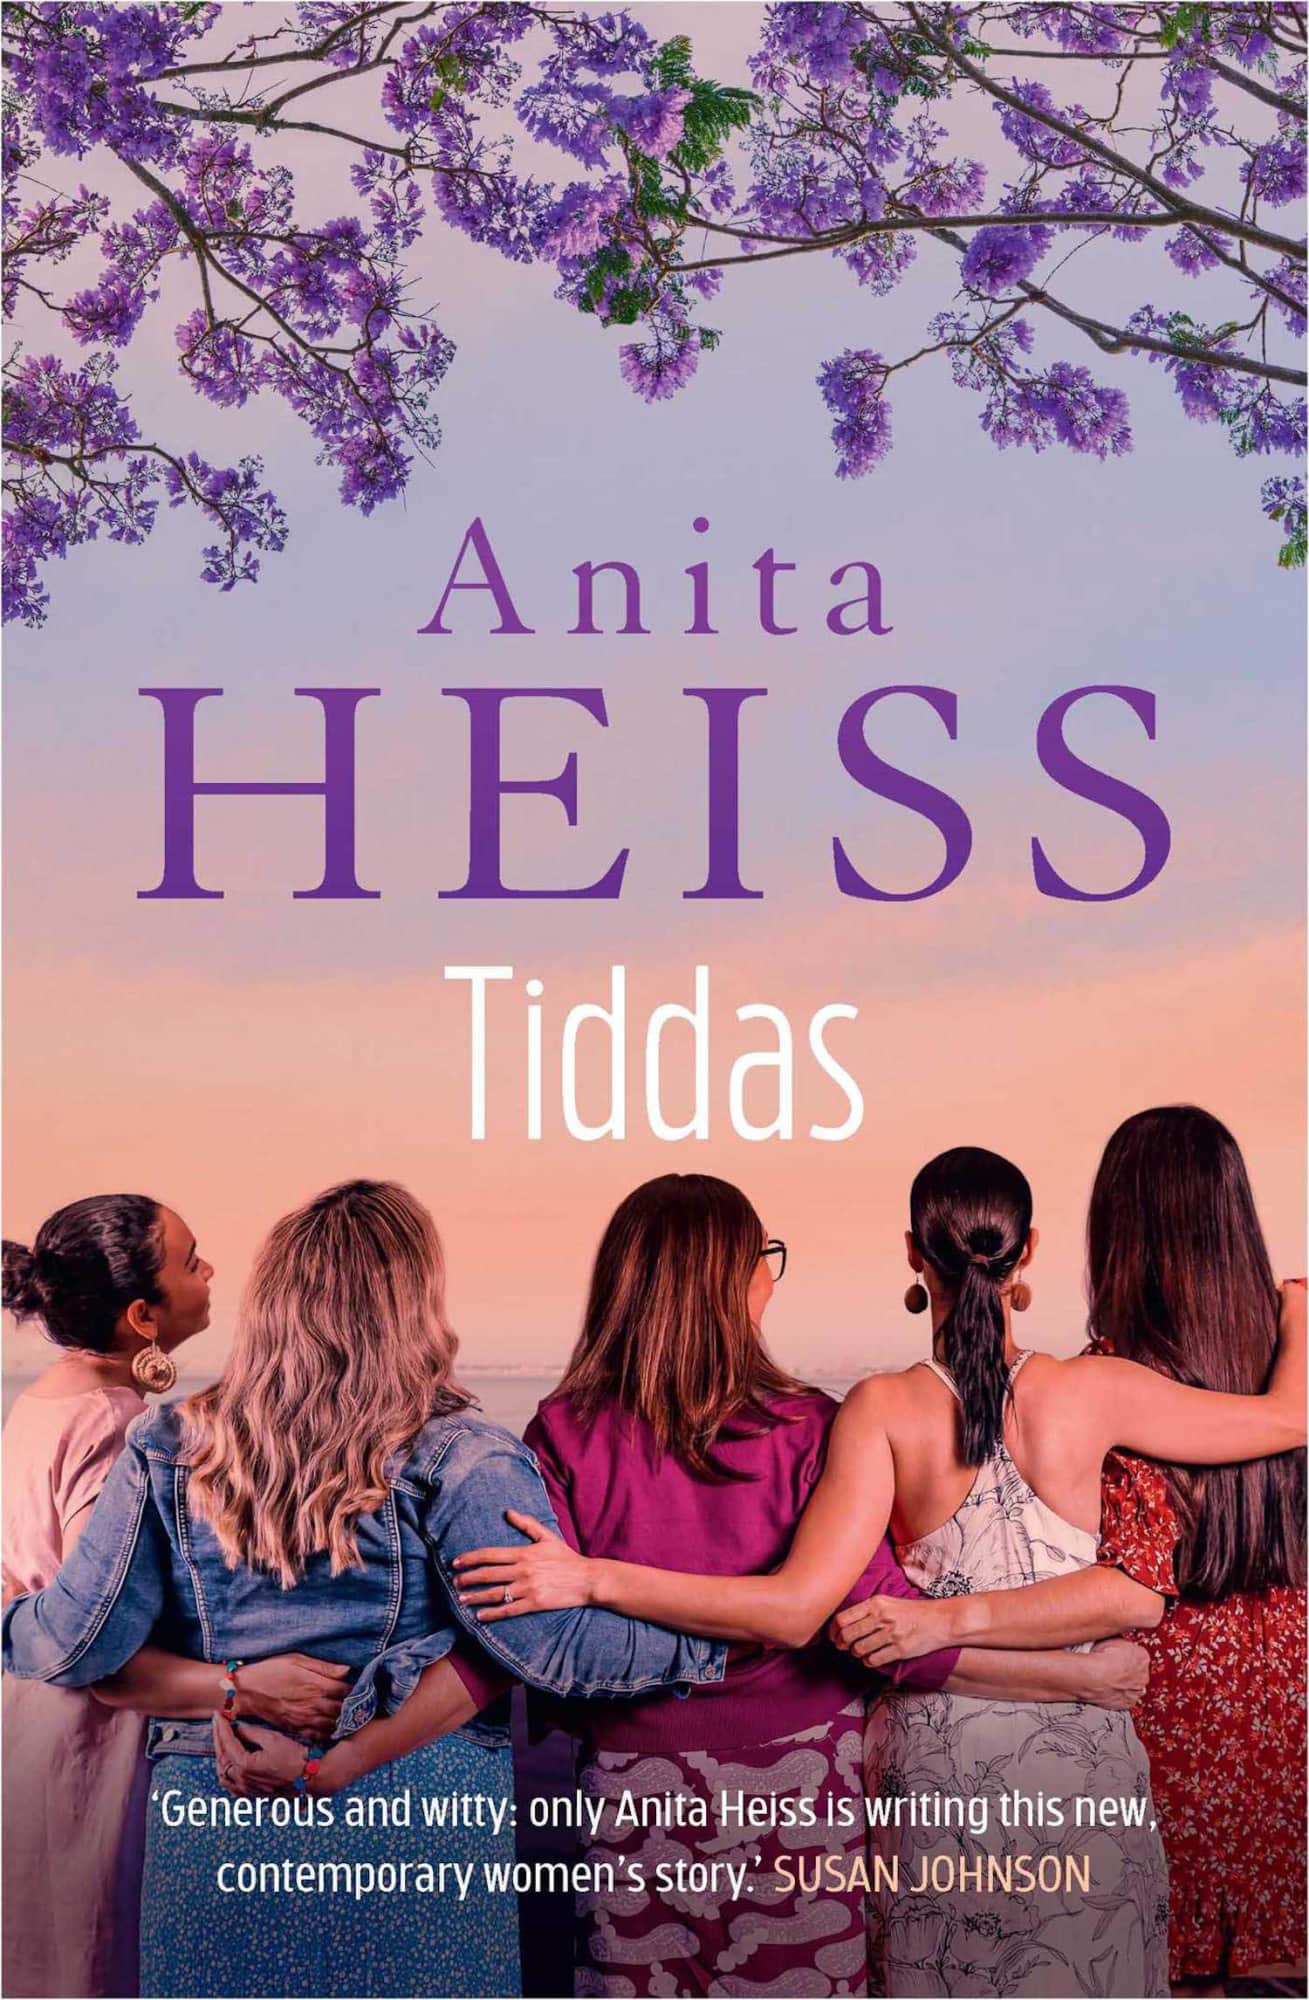 Anita Heiss Tiddas